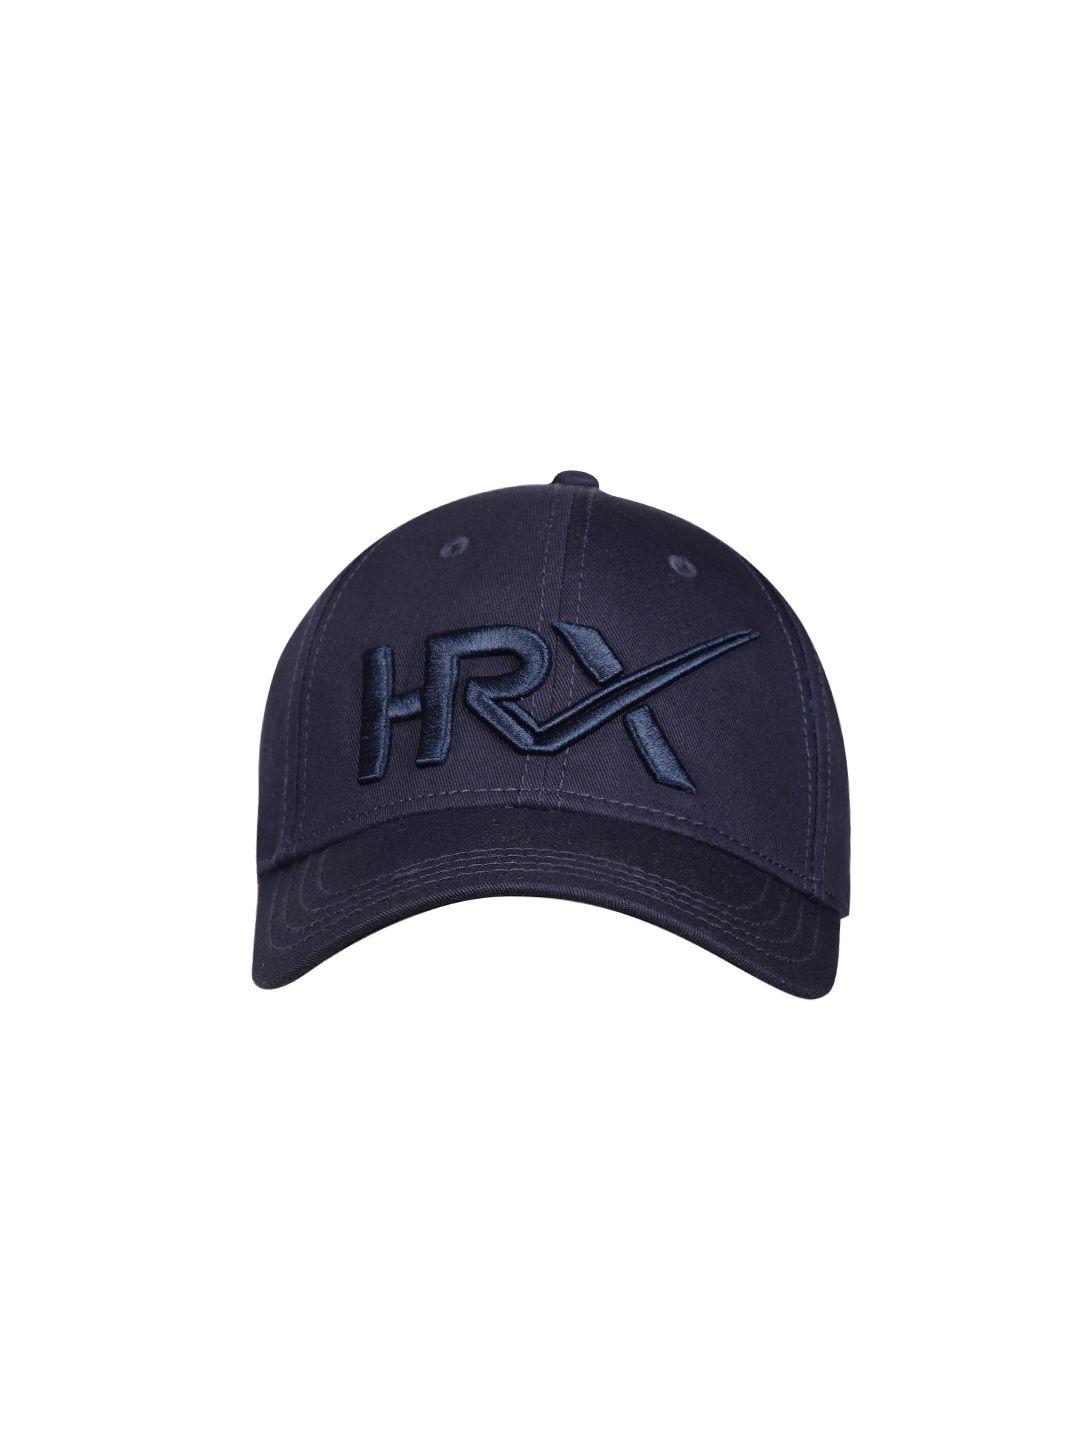 hrx by hrithik roshan unisex navy blue solid lifestyle cap